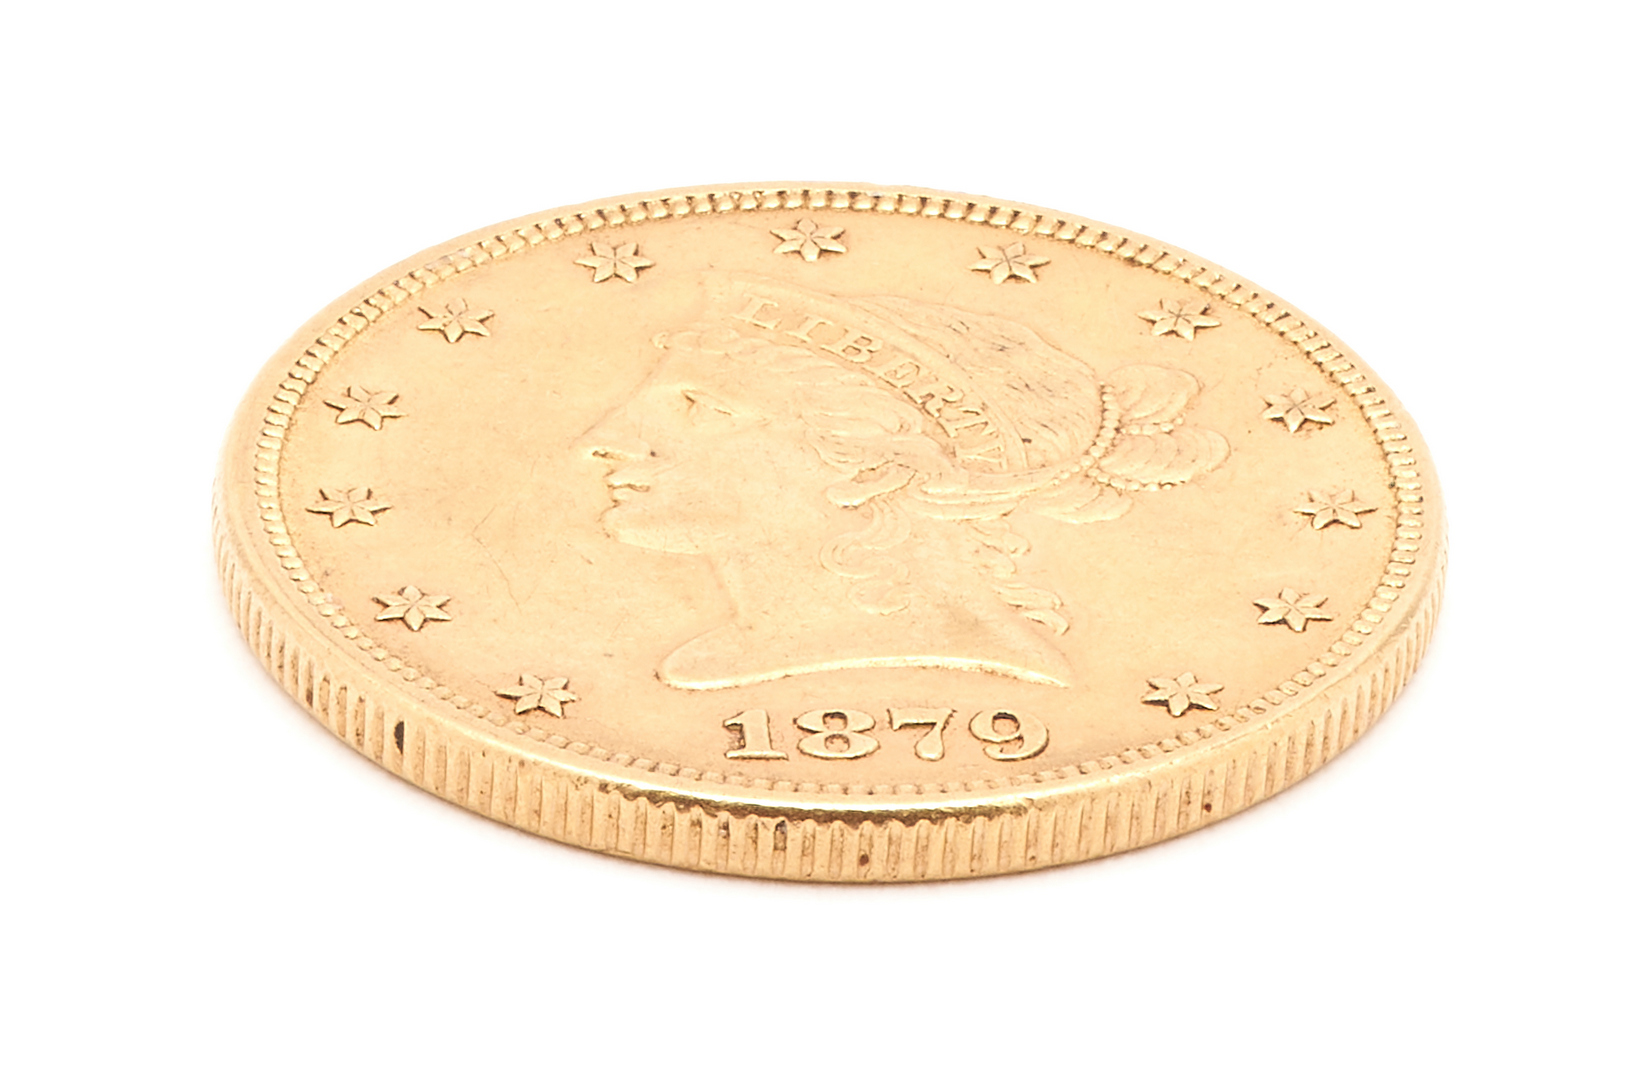 Lot 833: 1879 $10 Liberty Head Gold Eagle Coin